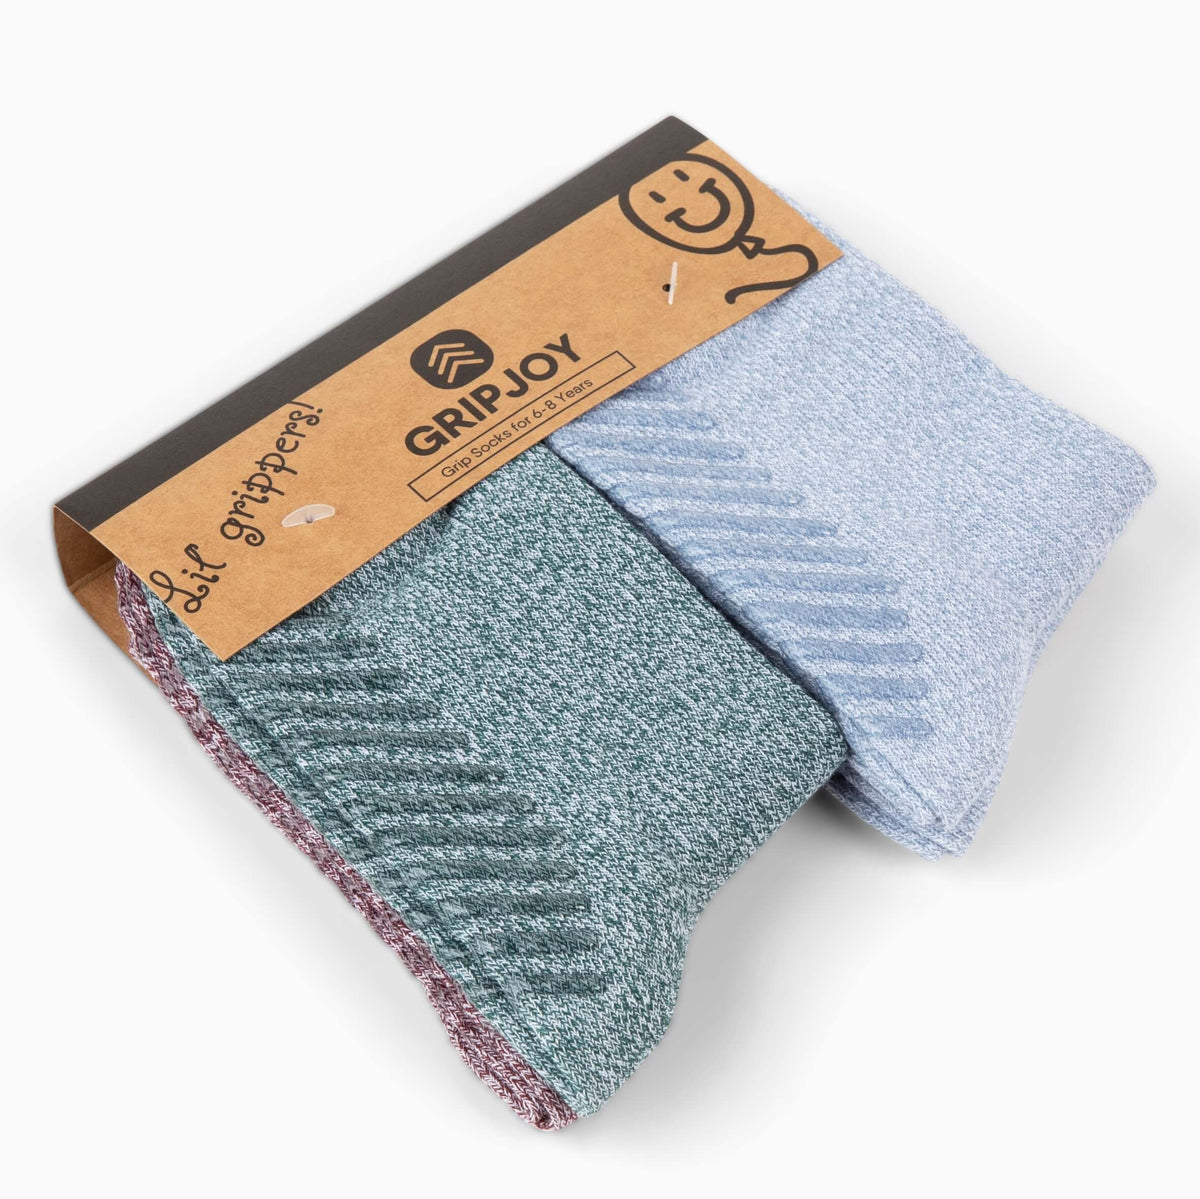 Green, Blue, Maroon Grip Socks for Toddlers &amp; Kids - 4 pairs - Gripjoy Socks